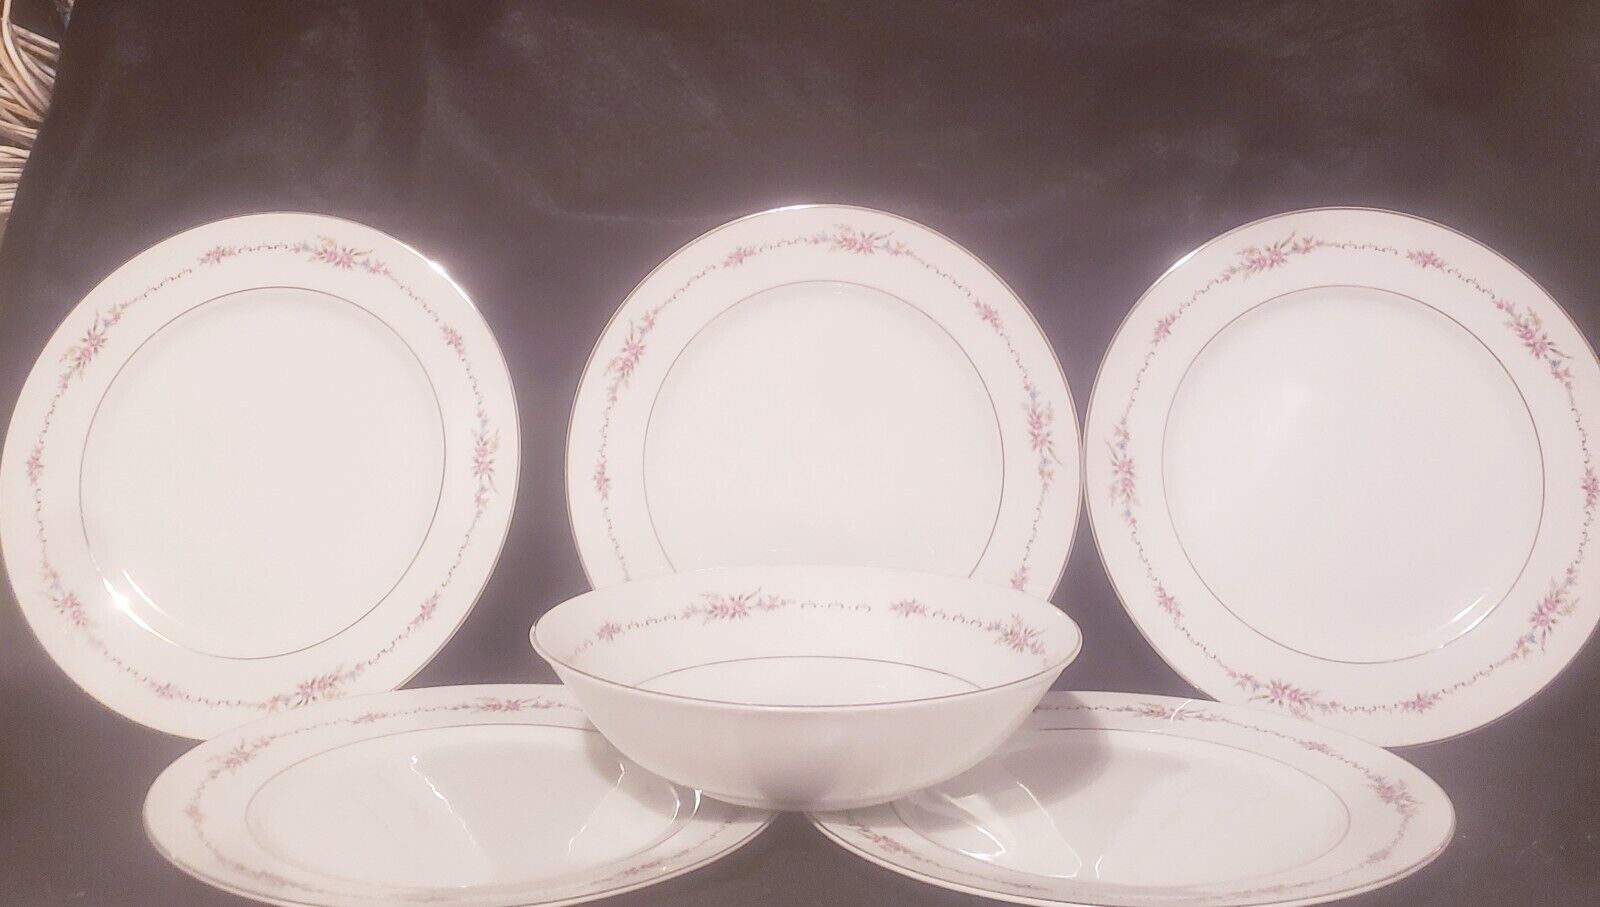 Vintage Empress China Exquisite 1130 Made In Japan Serving Bowl & 4 Plates